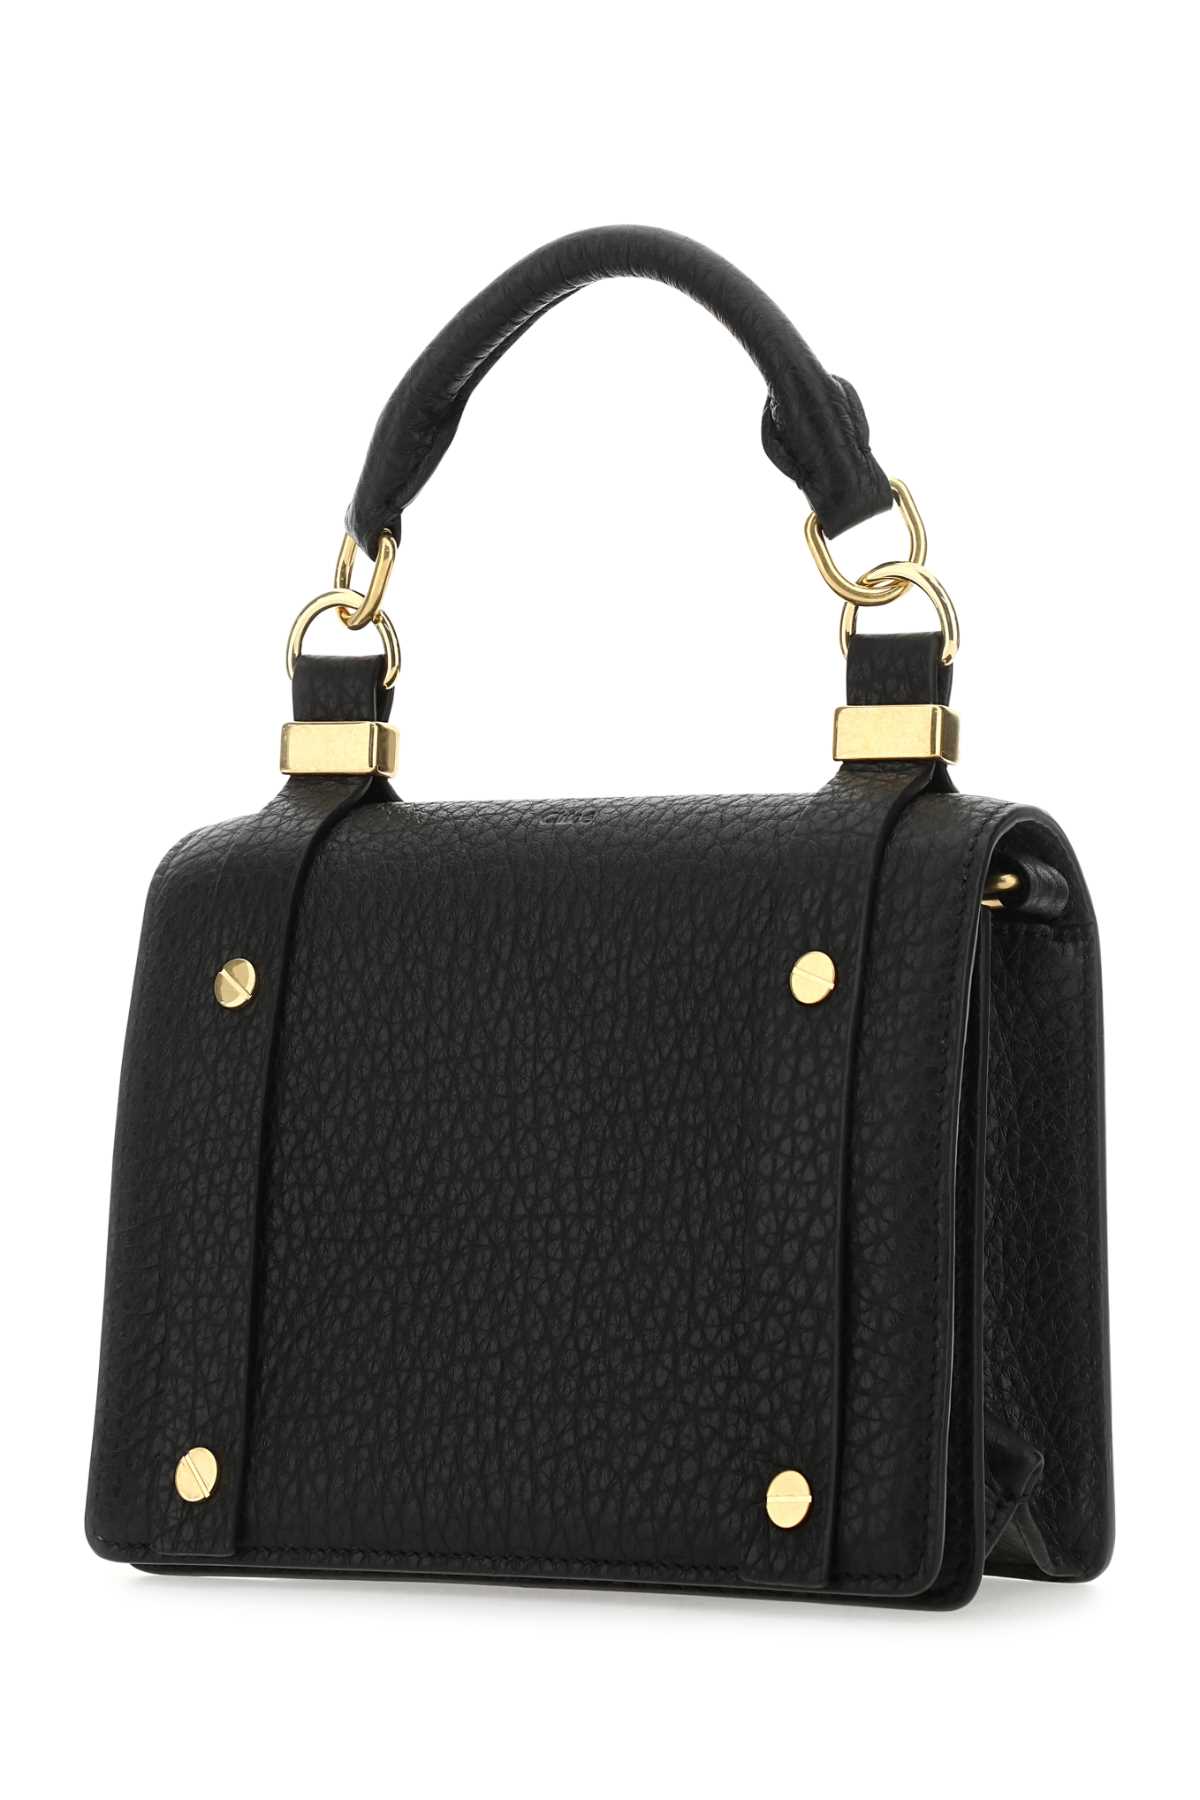 Chloé Black Leather Small Ora Handbag In 001